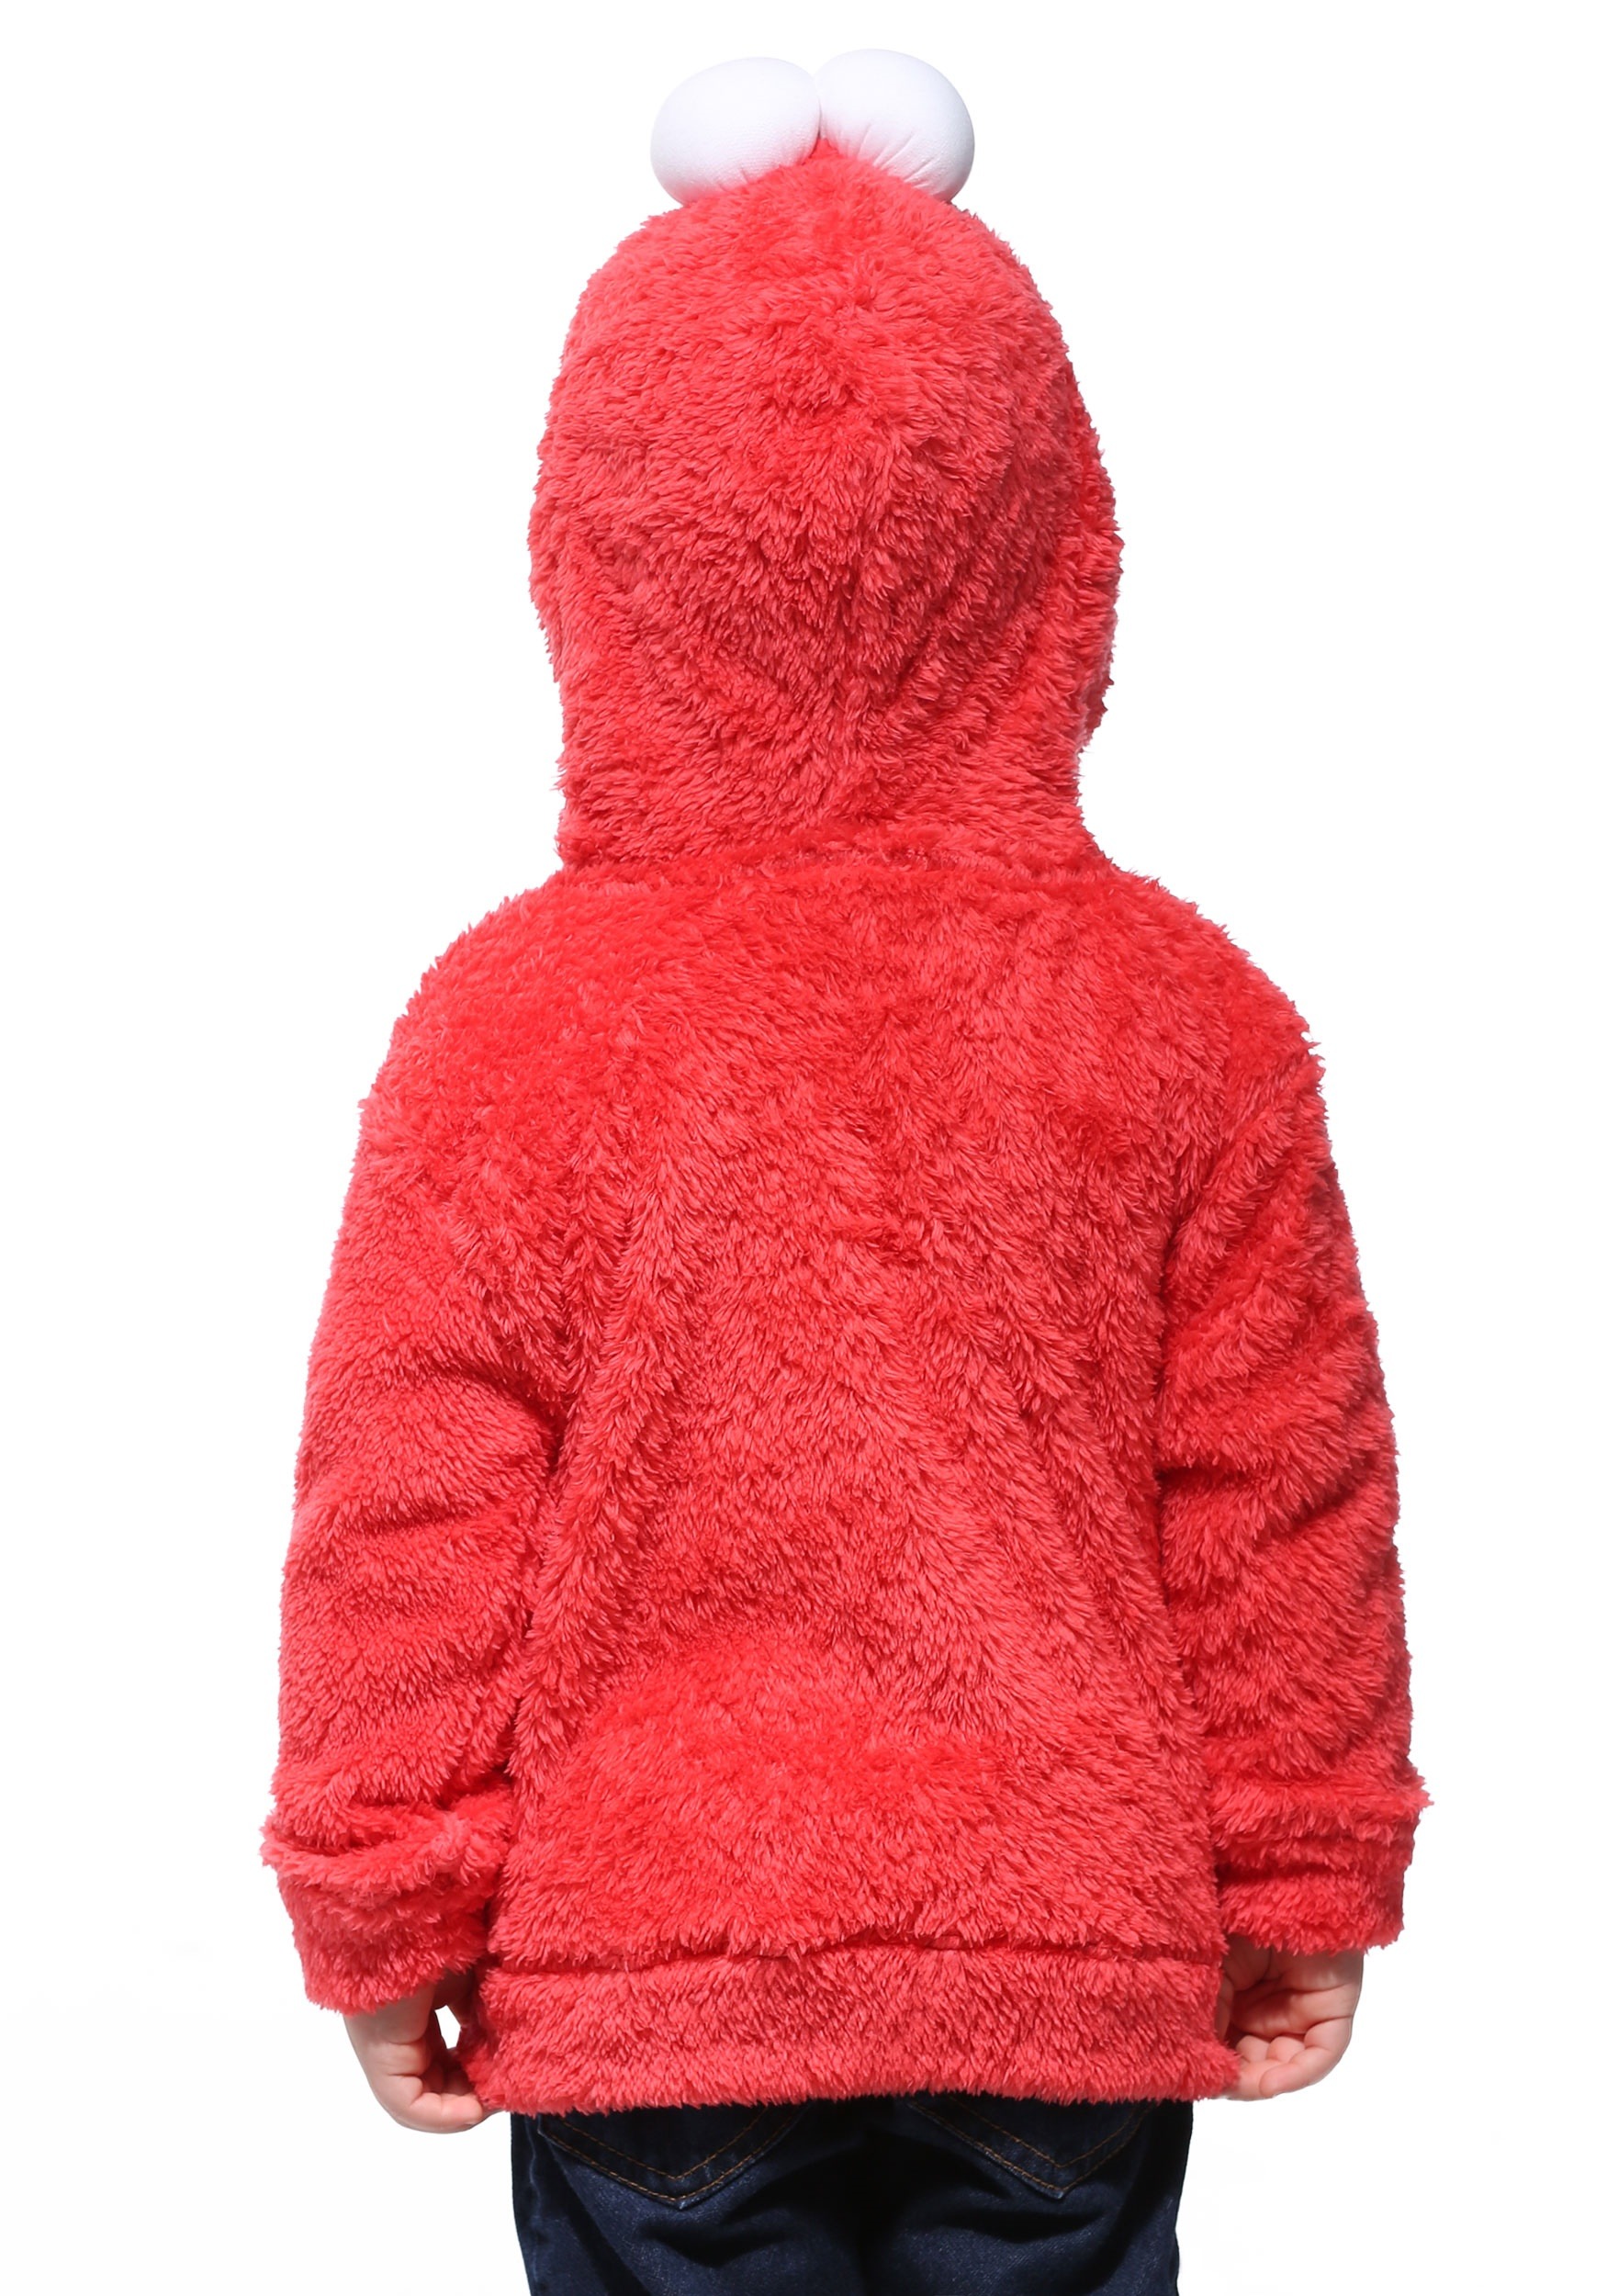 Sesame Street Elmo Faux Fur Costume Hoodie For Kids